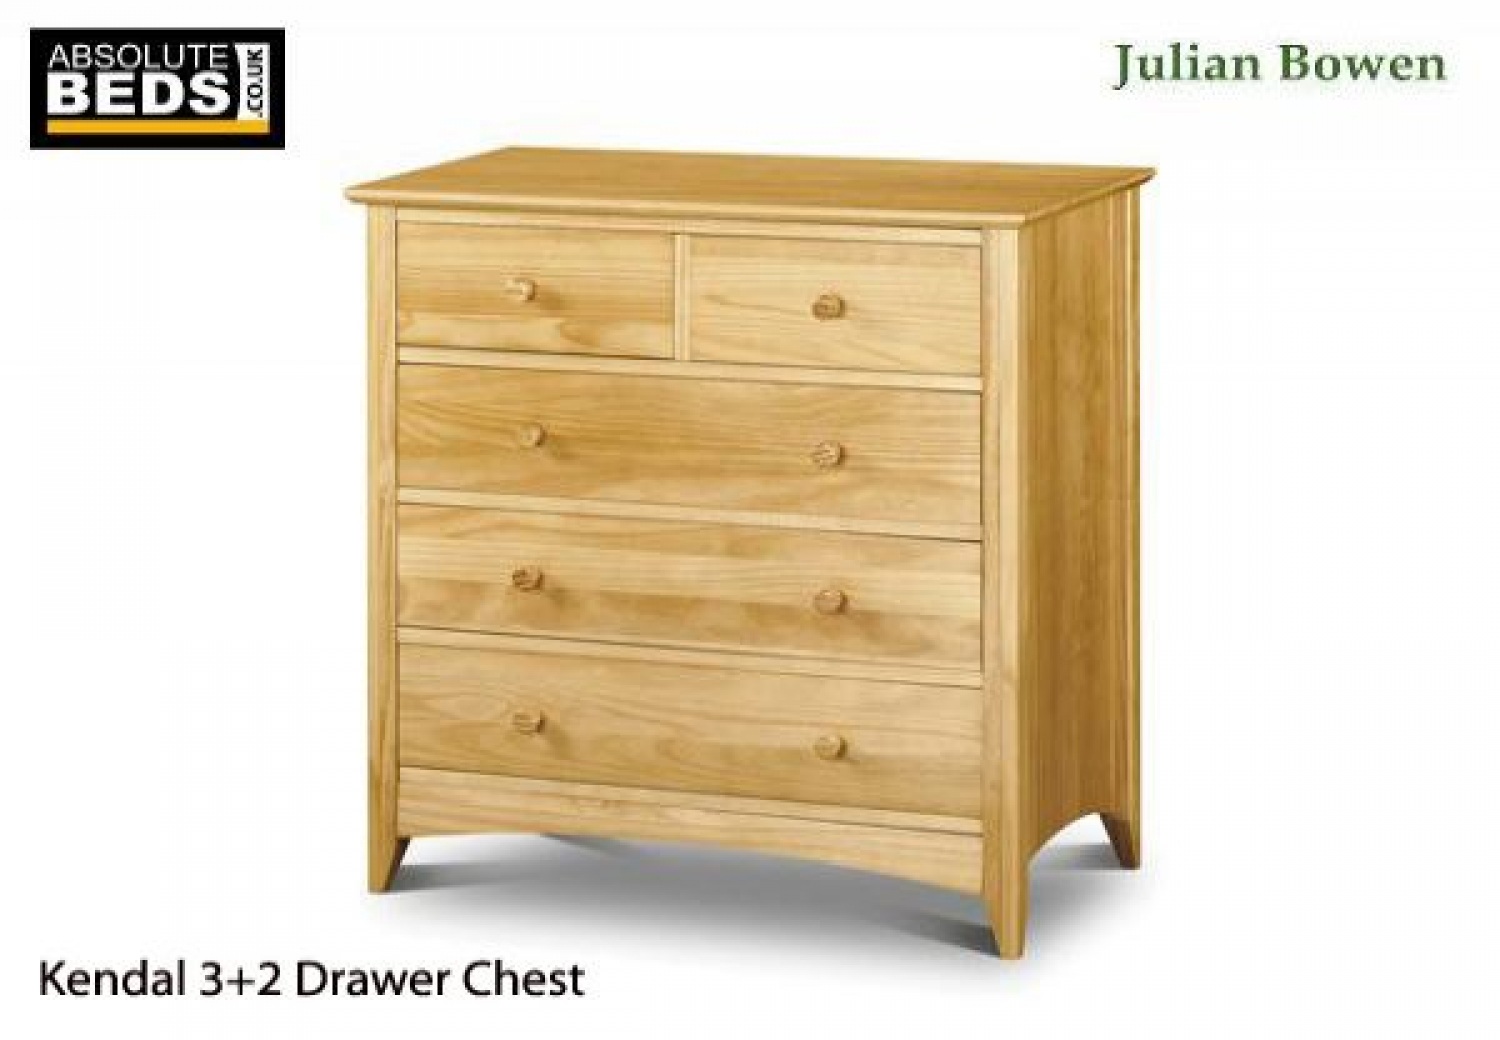 julian bowen kendal 3+2 chest of drawers image